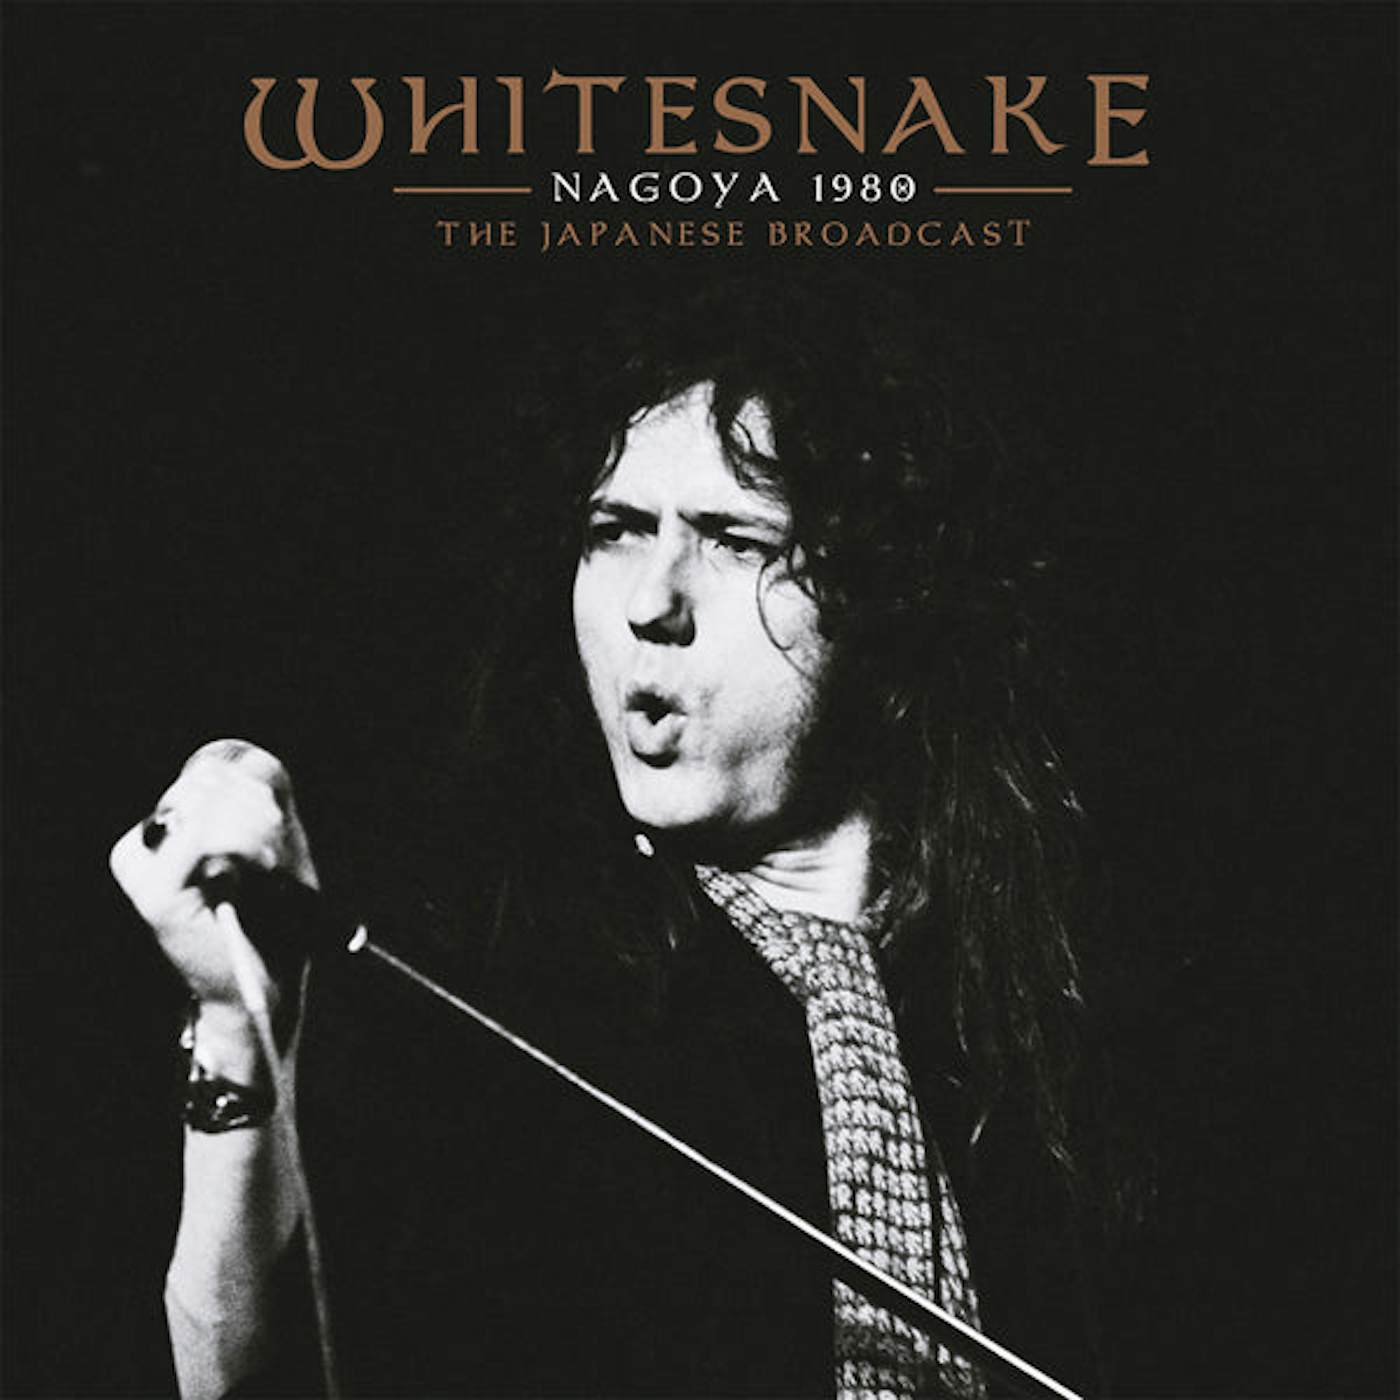 Whitesnake LP - Nagoya 1980 (White Vinyl)